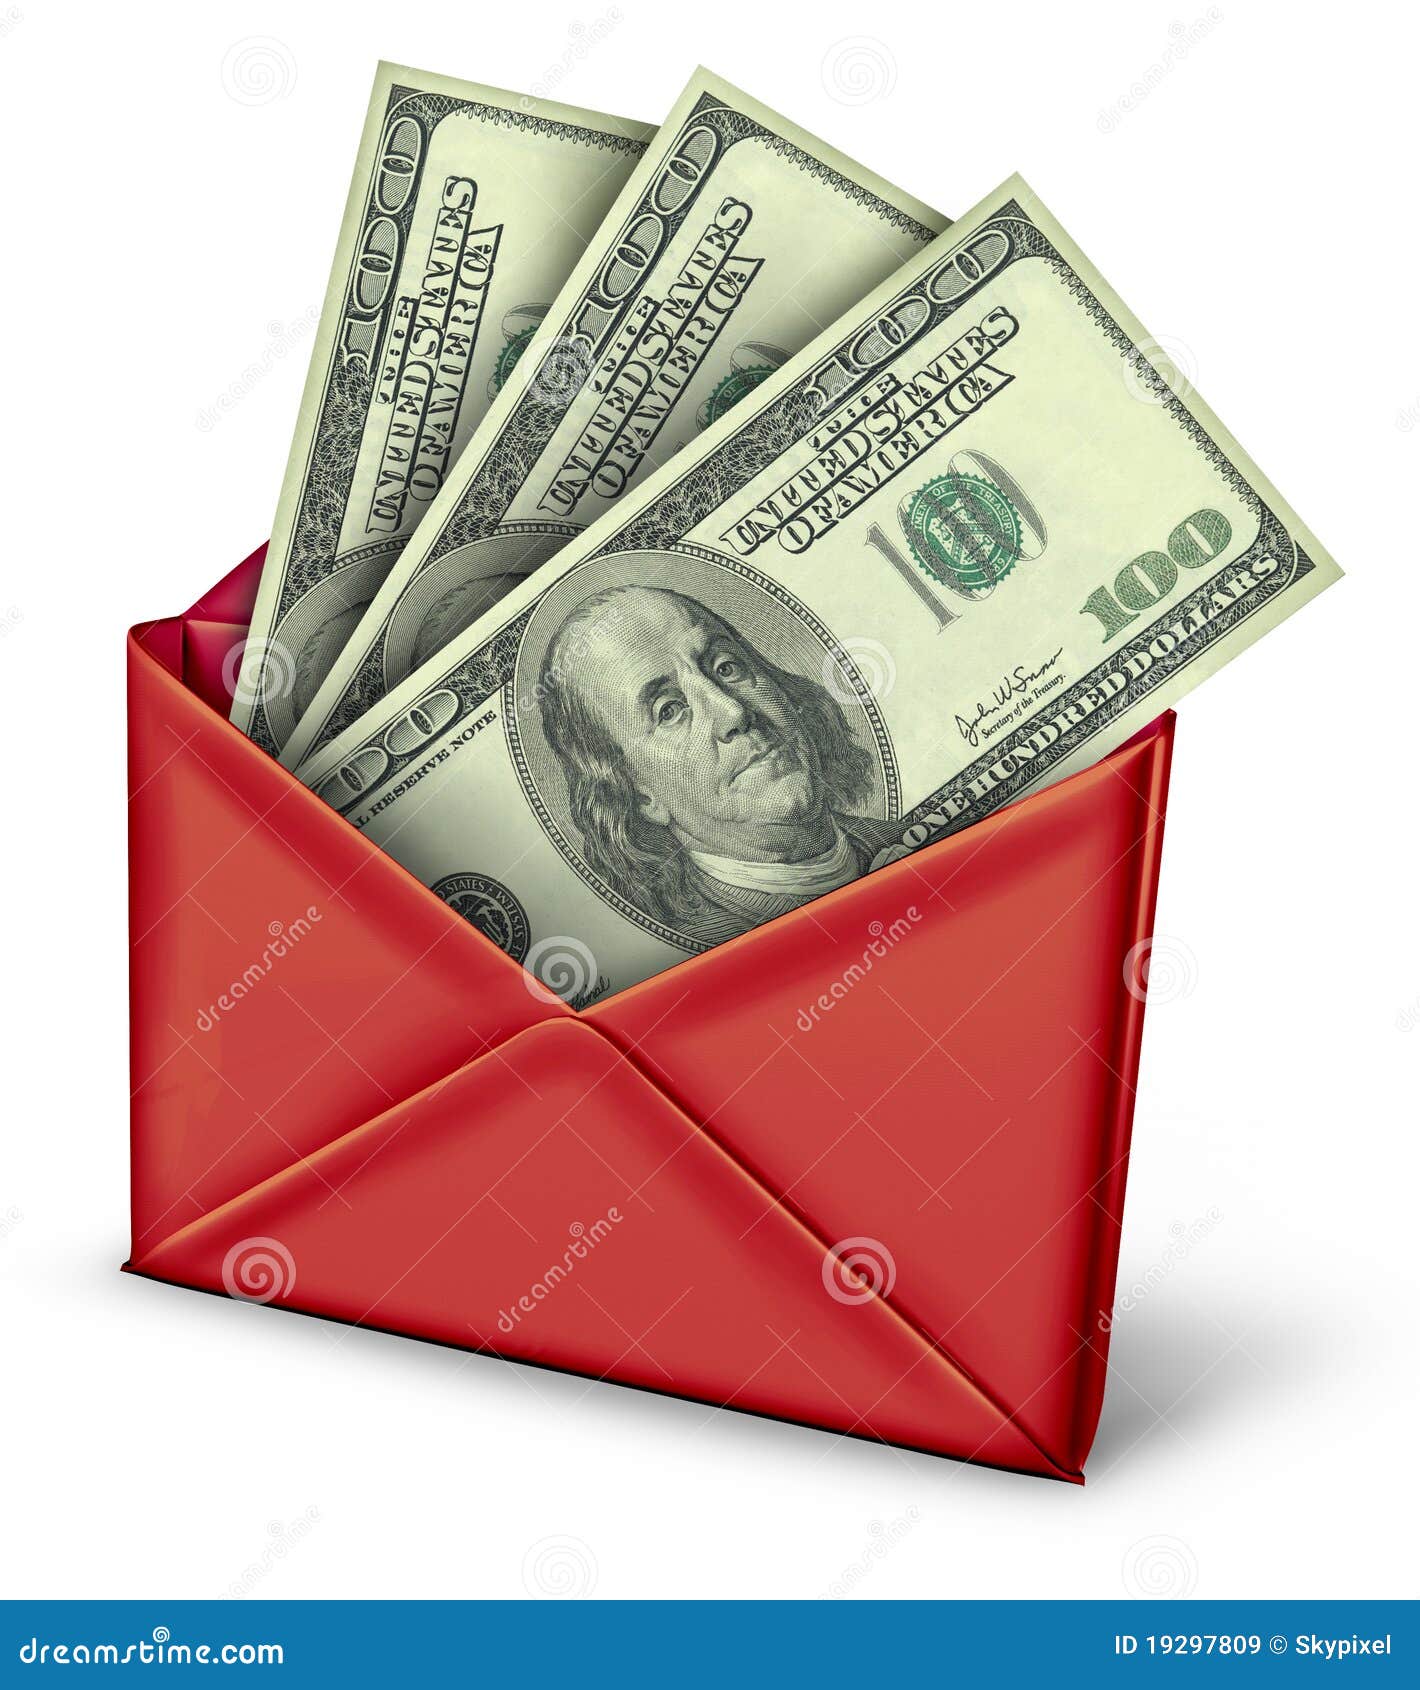 mail-in-rebate-in-red-envelope-stock-illustration-illustration-of